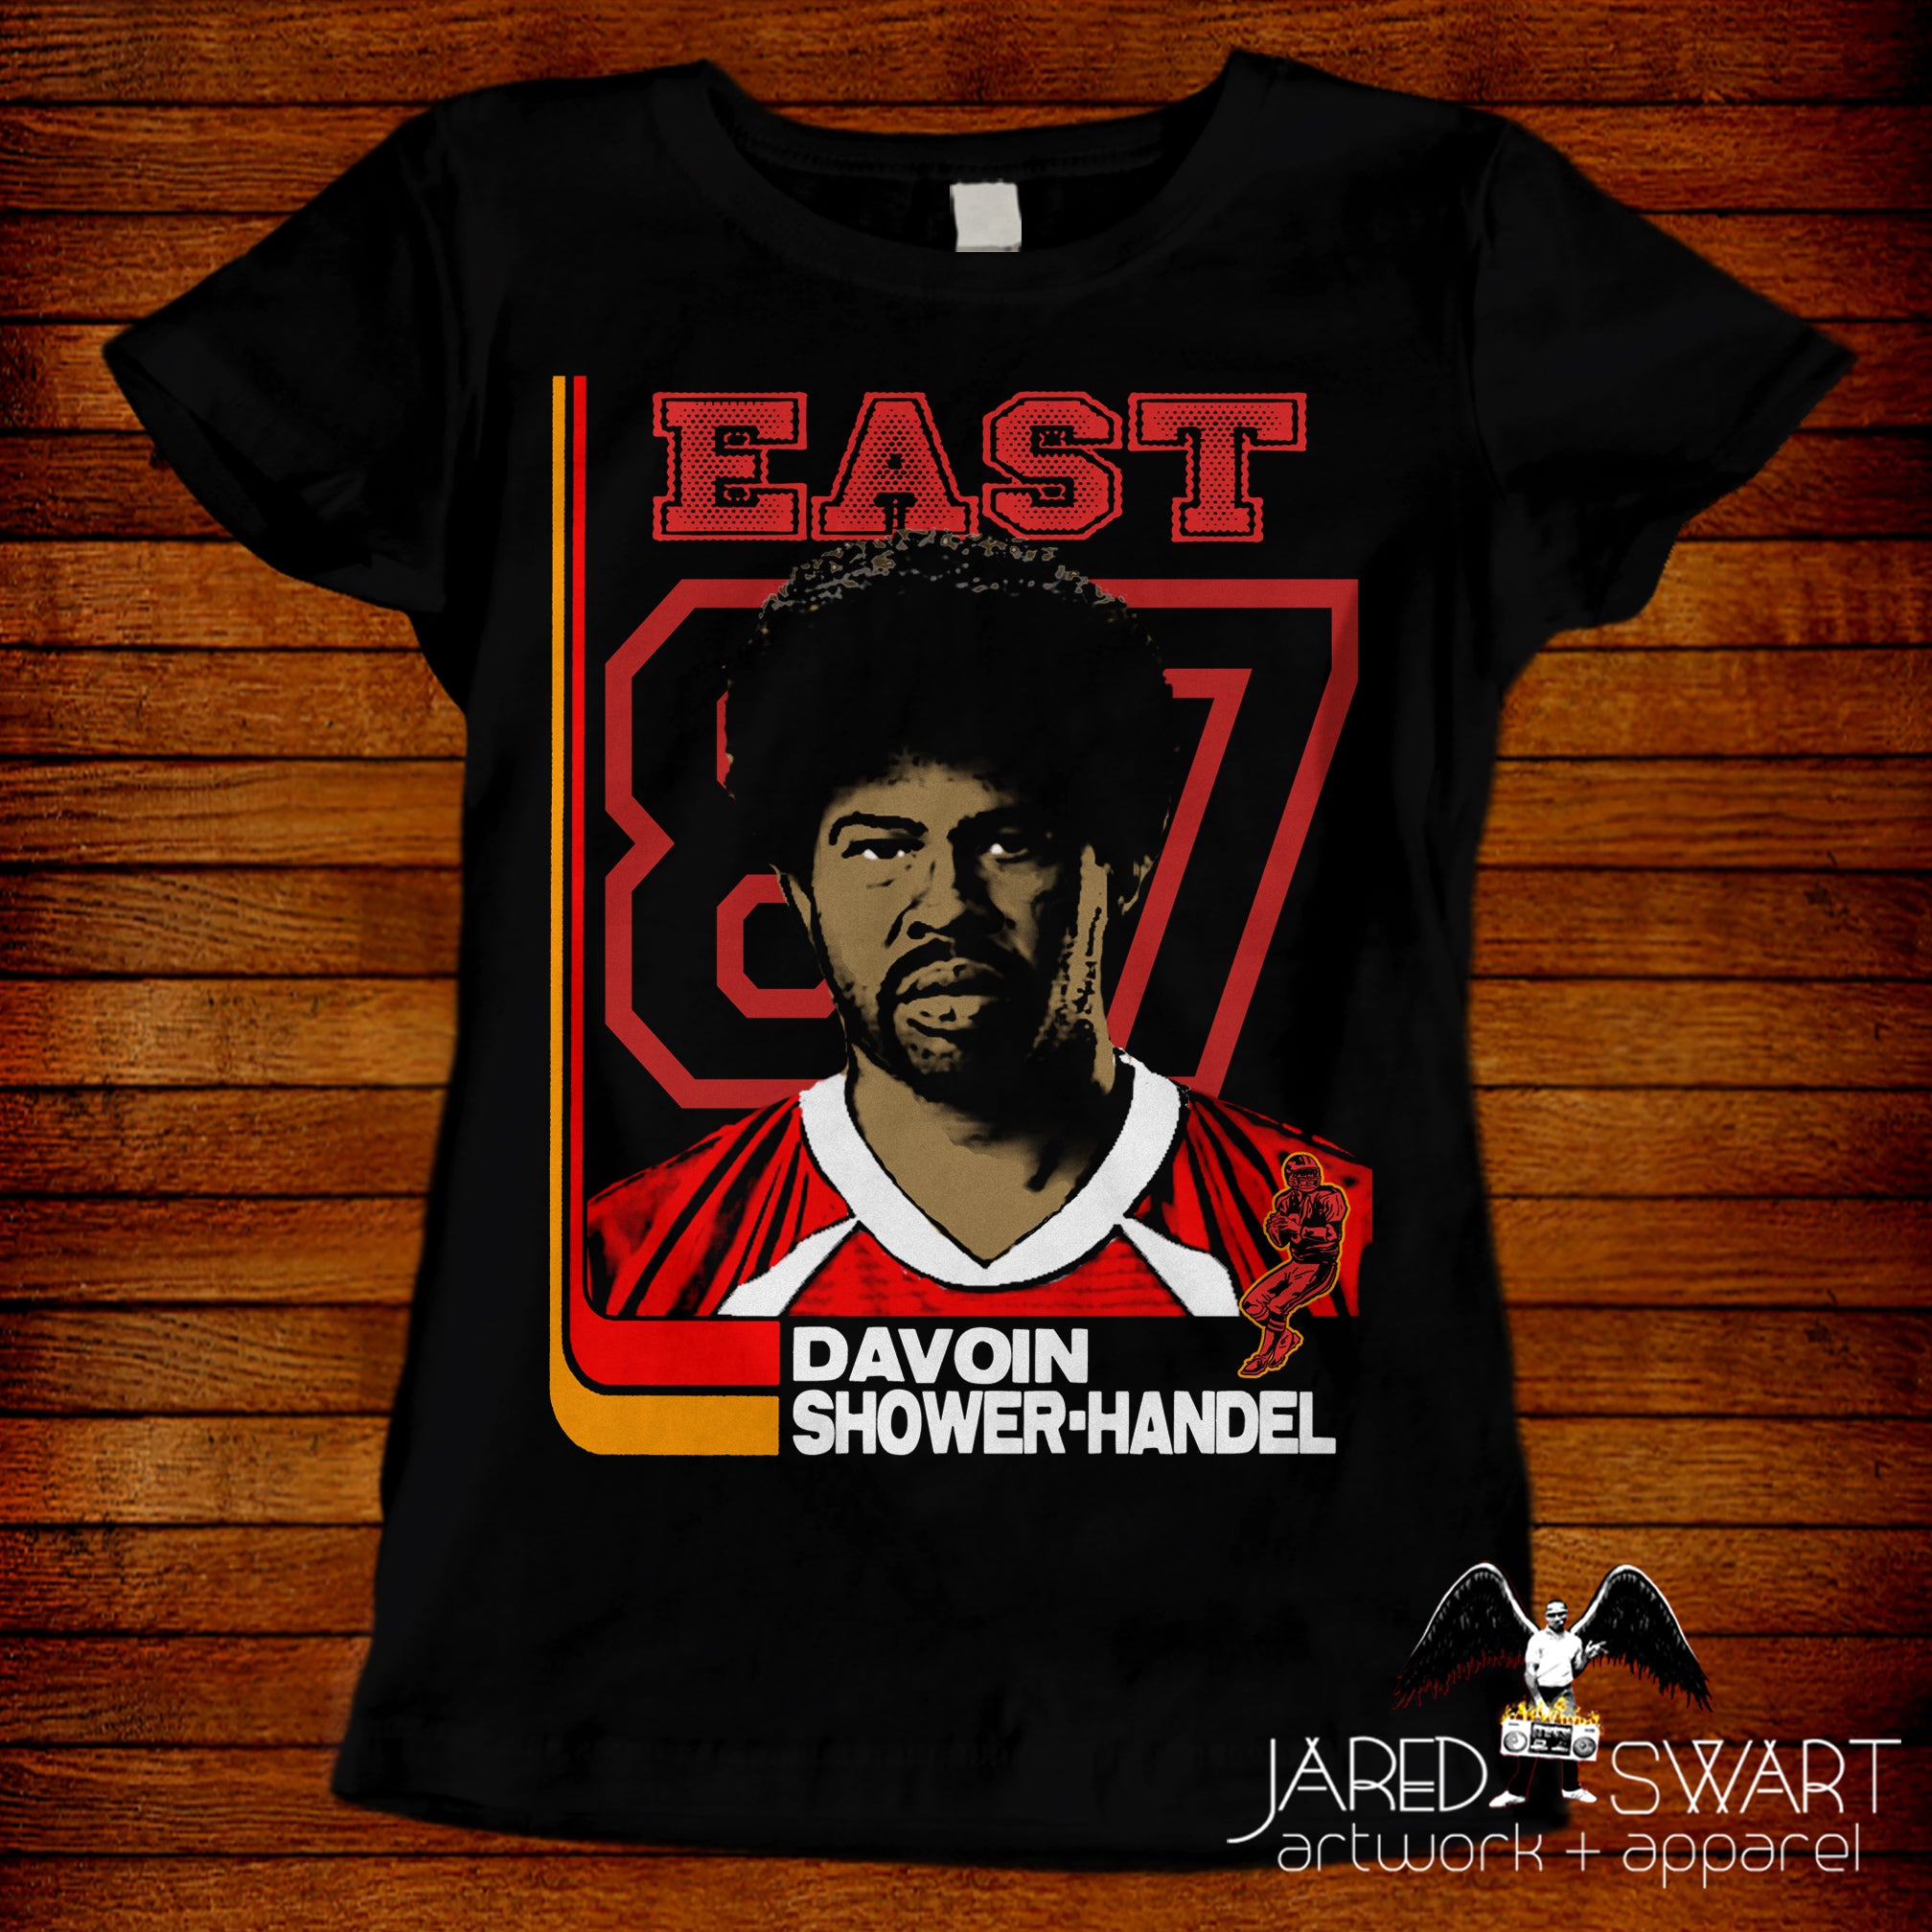 Davoin Shower-Handel T-shirt Key & Peele East/West Bowl